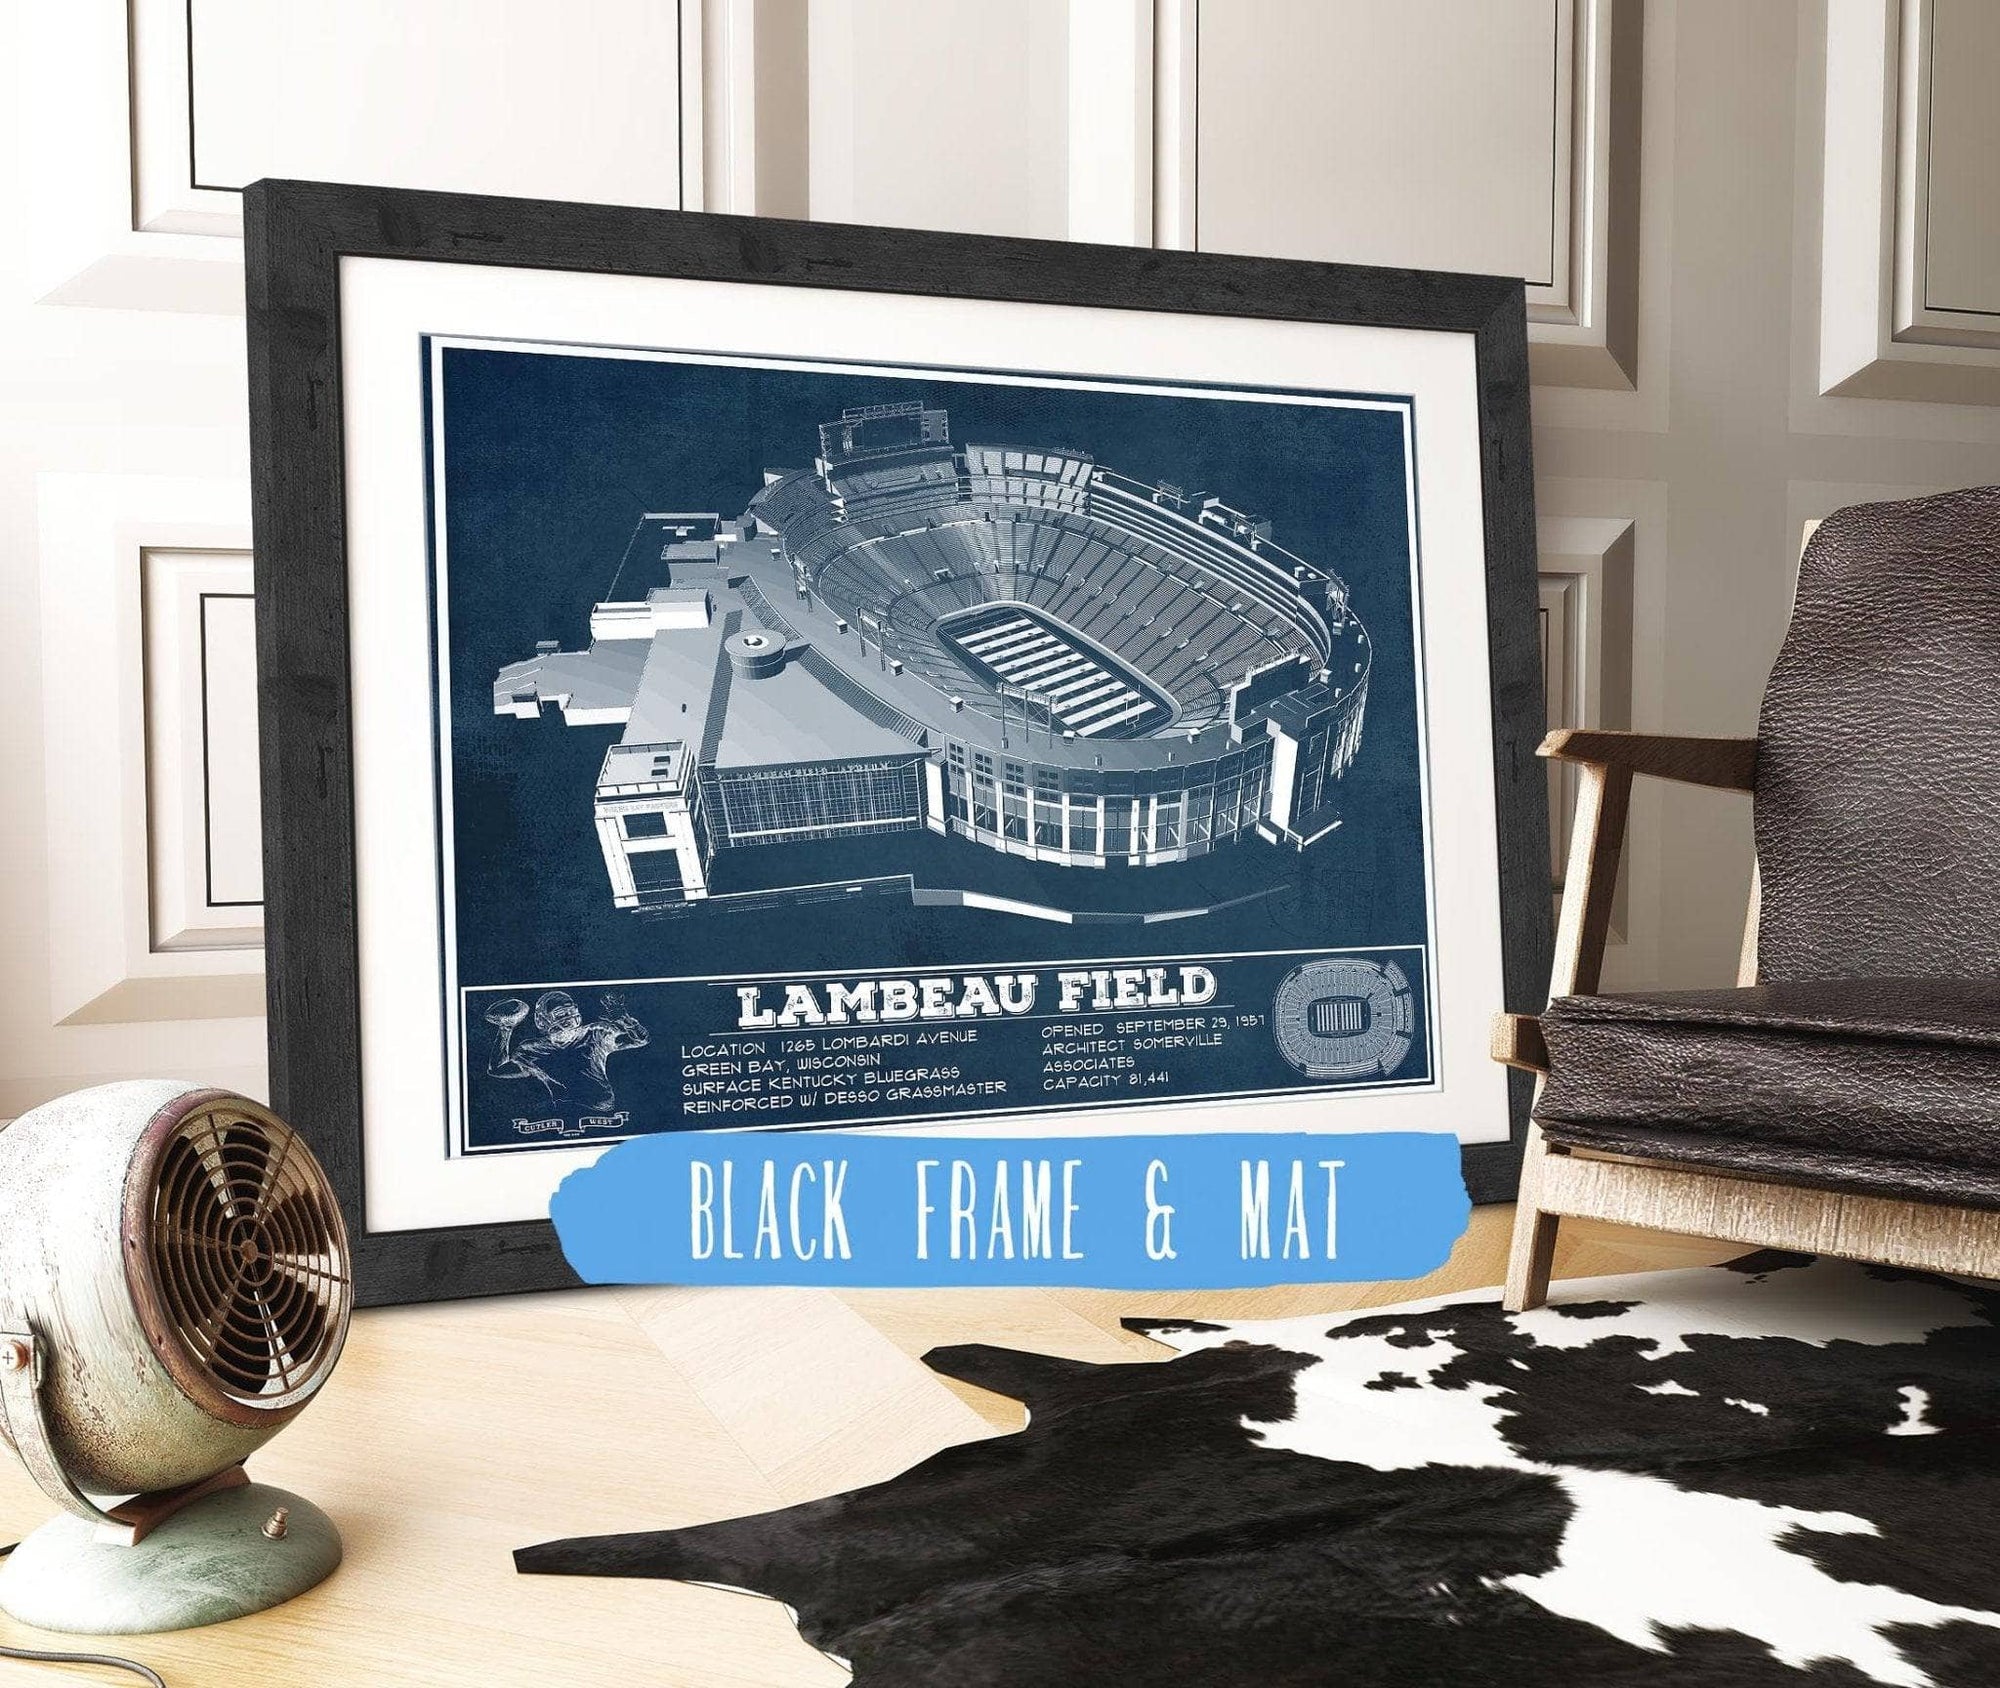 Cutler West Pro Football Collection 14" x 11" / Black Frame & Mat Green Bay Packers - Lambeau Field Vintage Football Print 698877220_66030